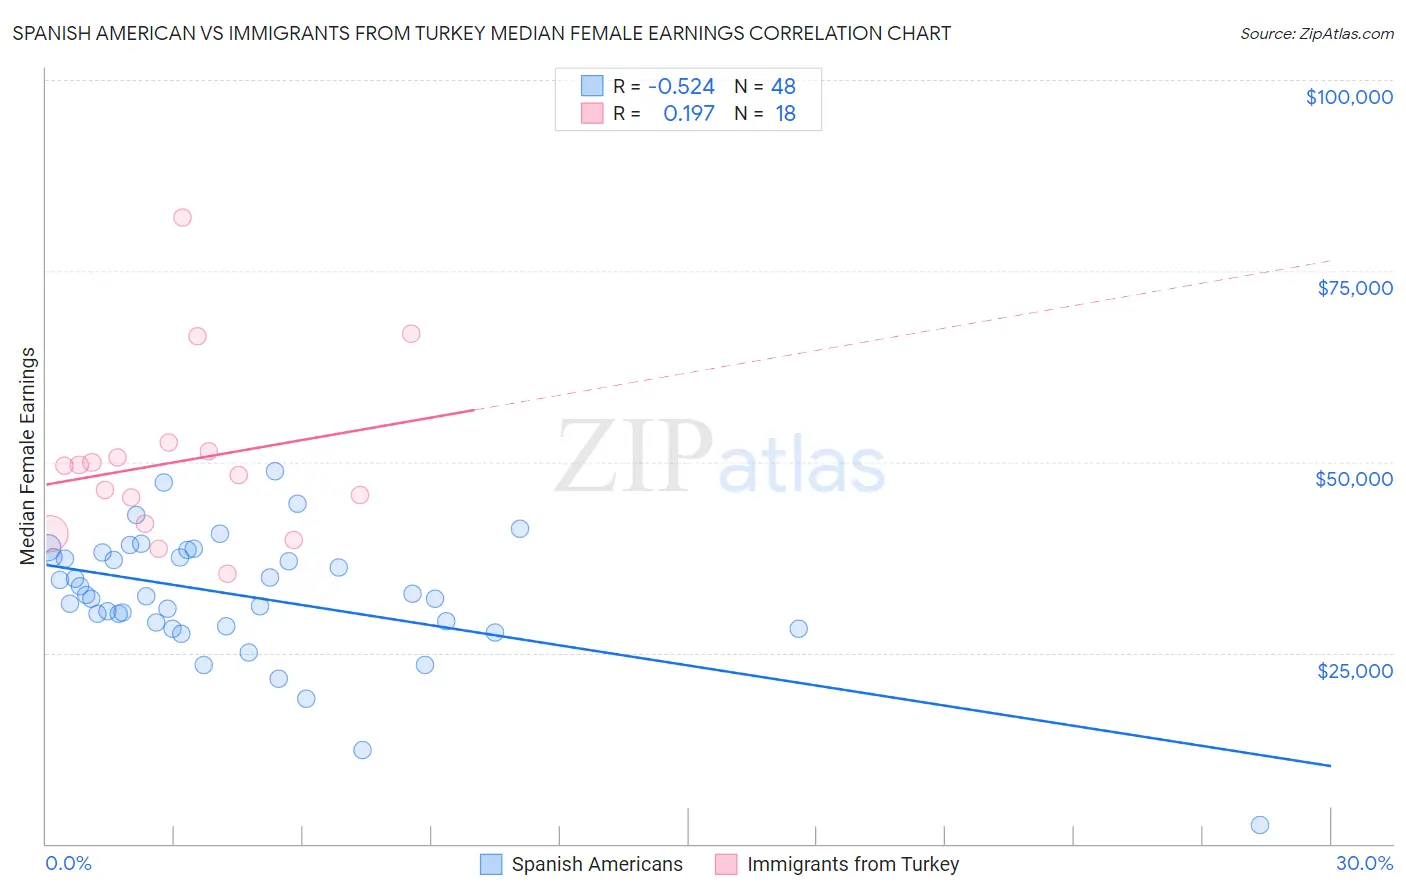 Spanish American vs Immigrants from Turkey Median Female Earnings